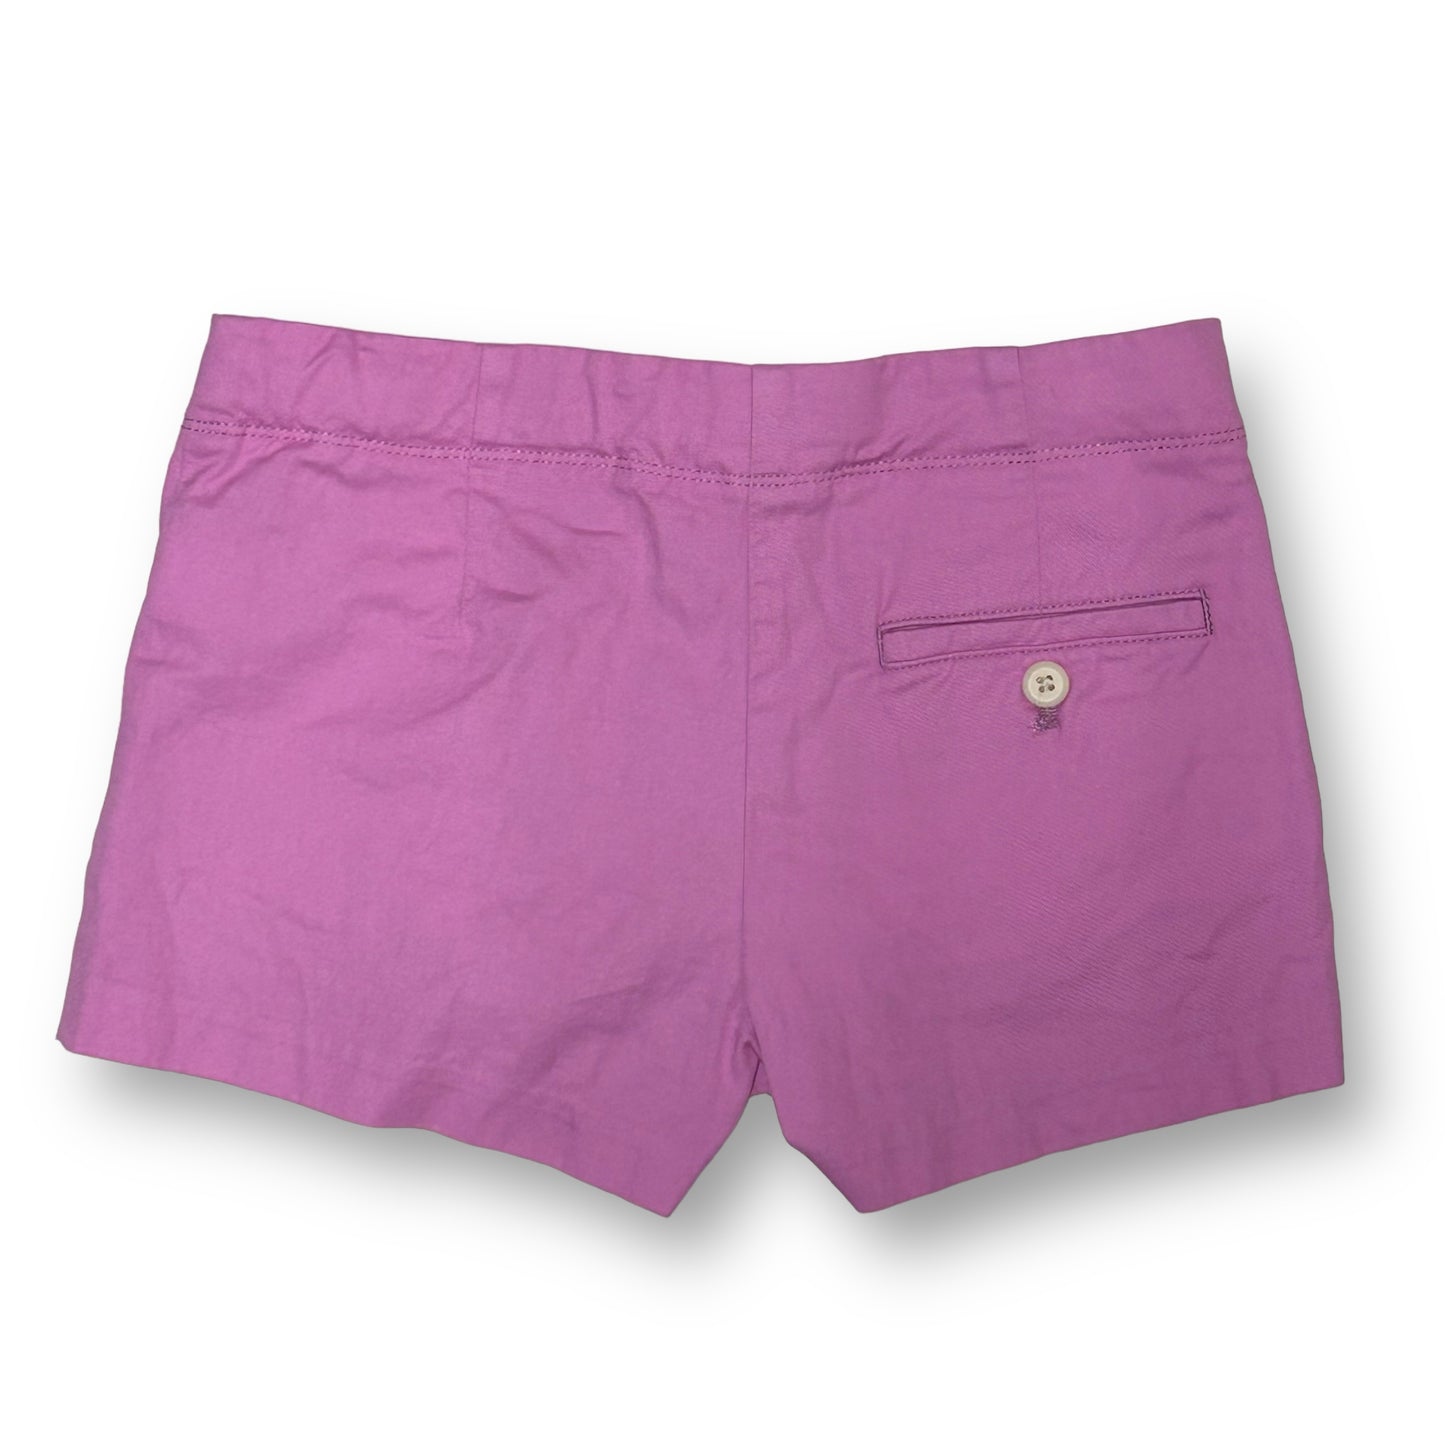 Girls Crewcuts Size 10 Pink Adjustable Waist Shorts